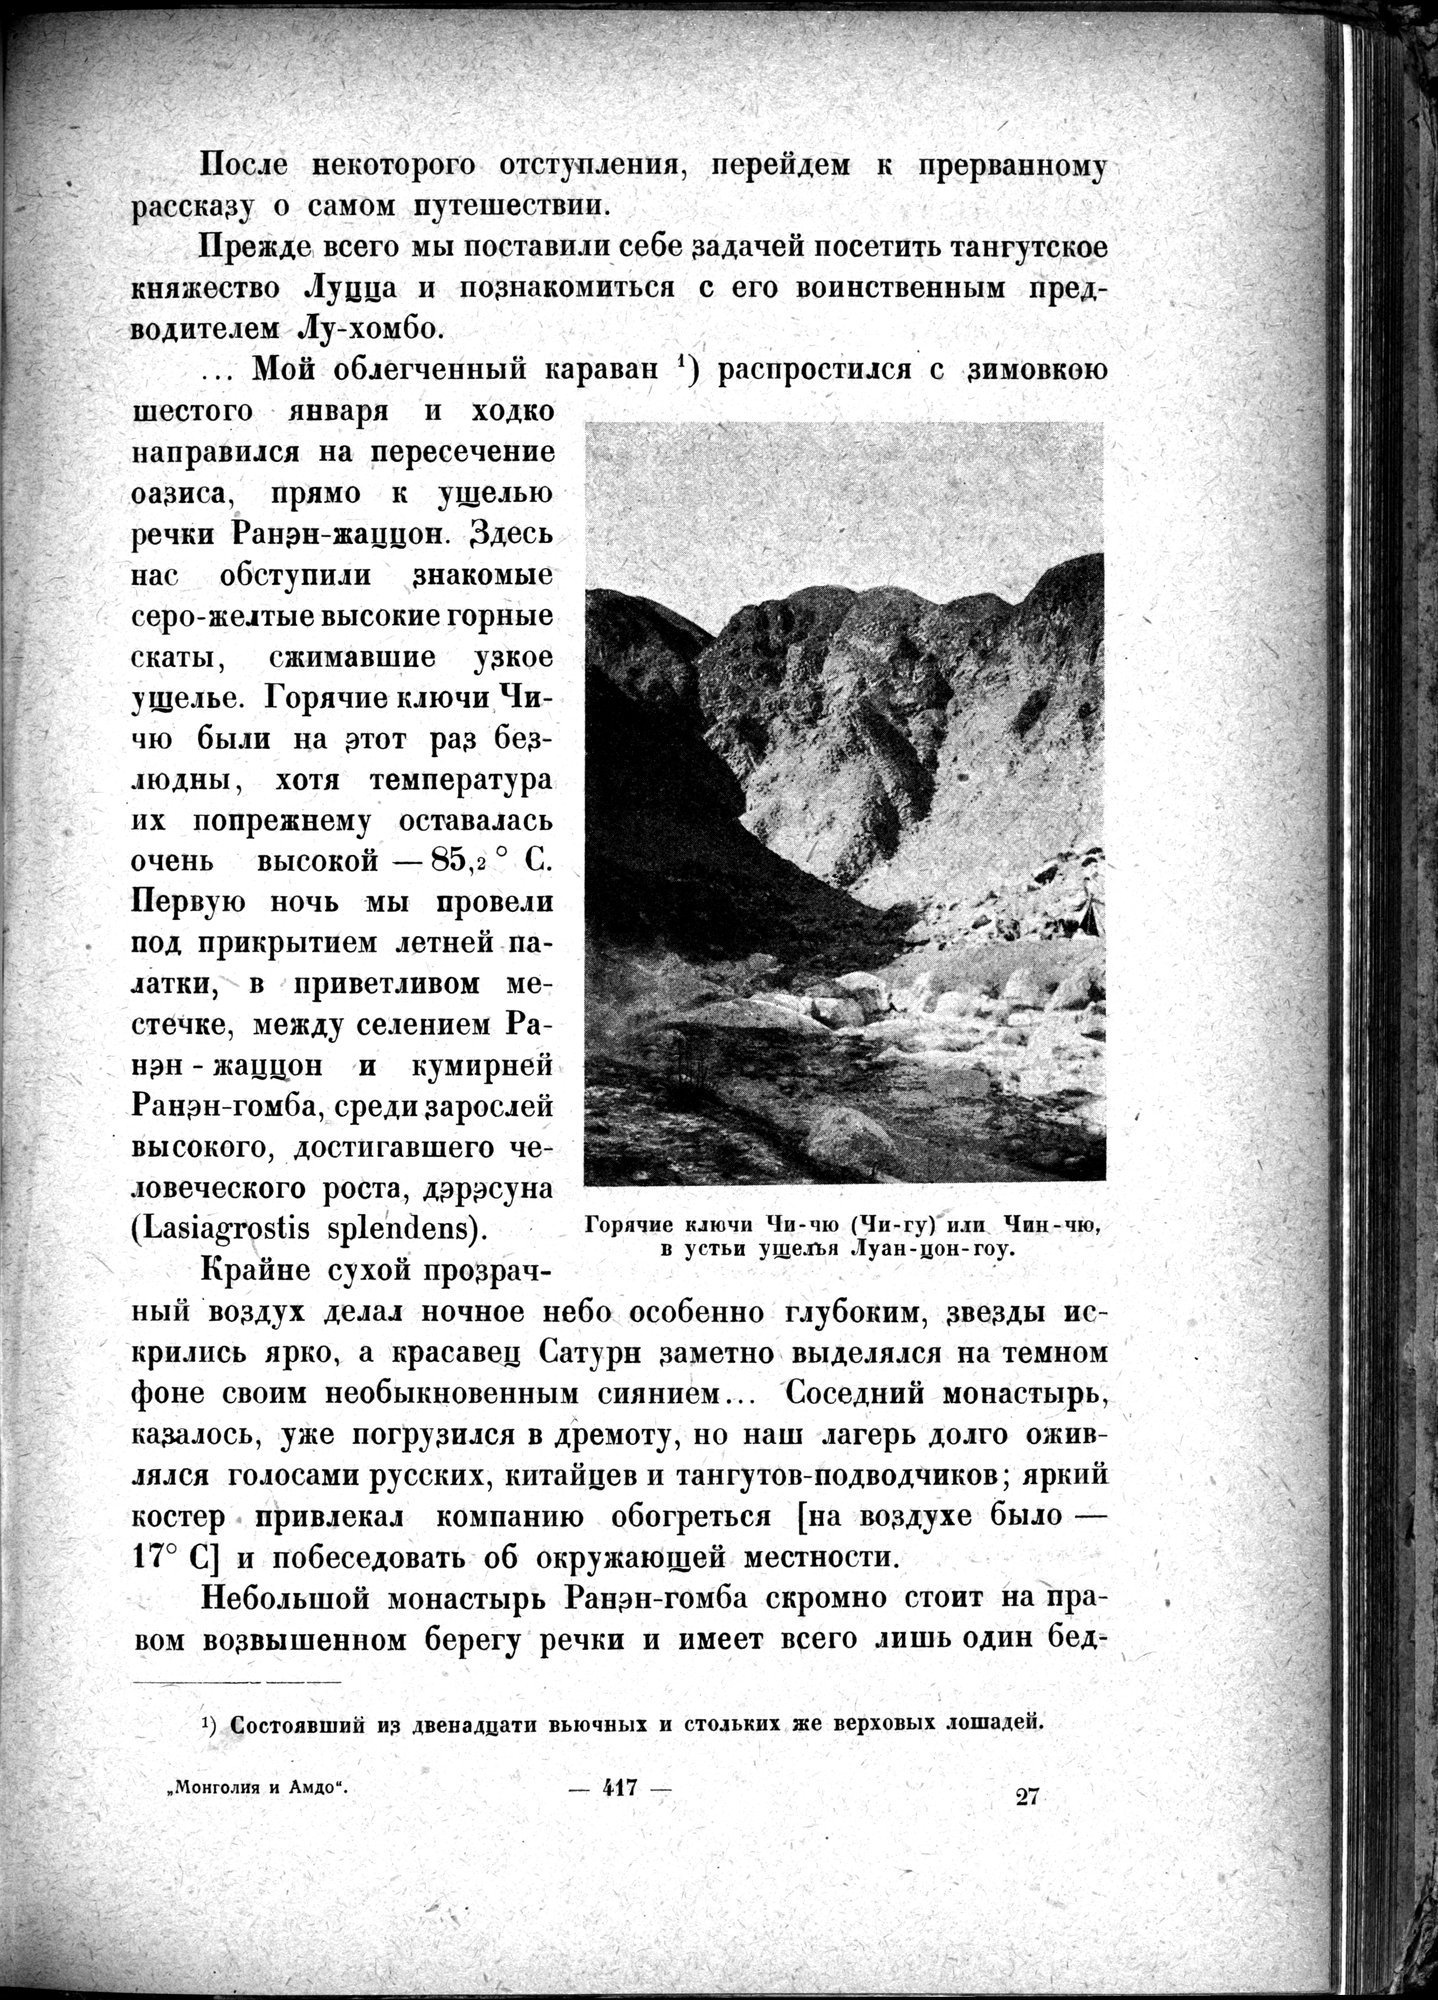 Mongoliya i Amdo i mertby gorod Khara-Khoto : vol.1 / Page 479 (Grayscale High Resolution Image)